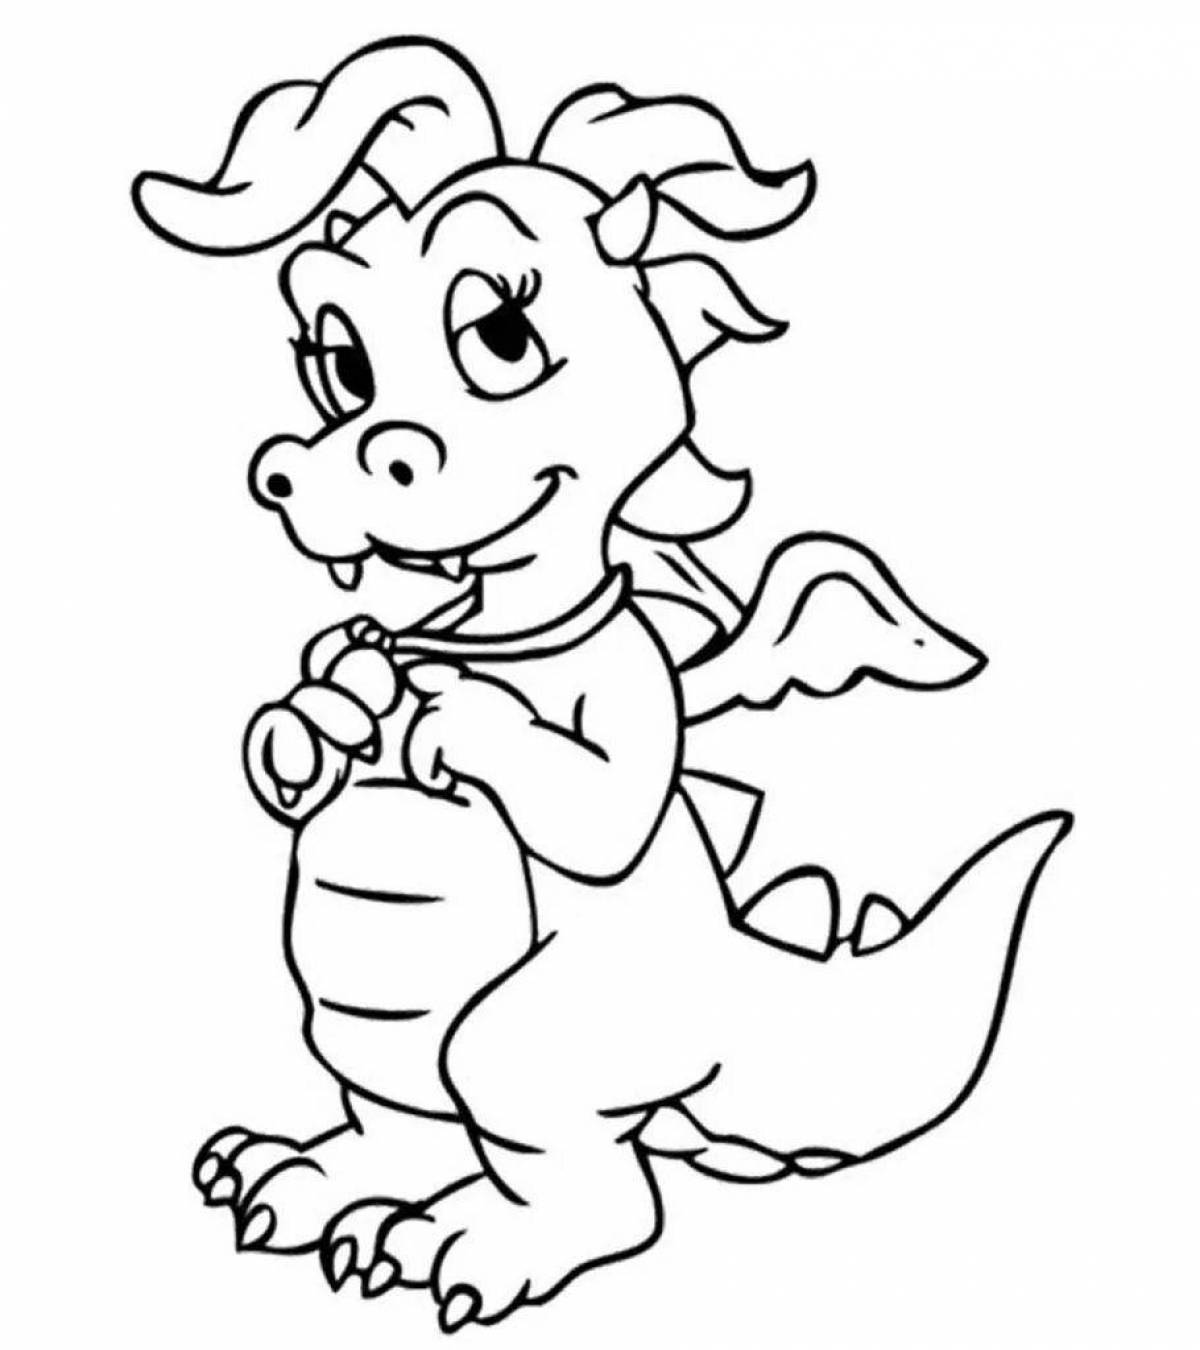 Joyful coloring dragon for kids